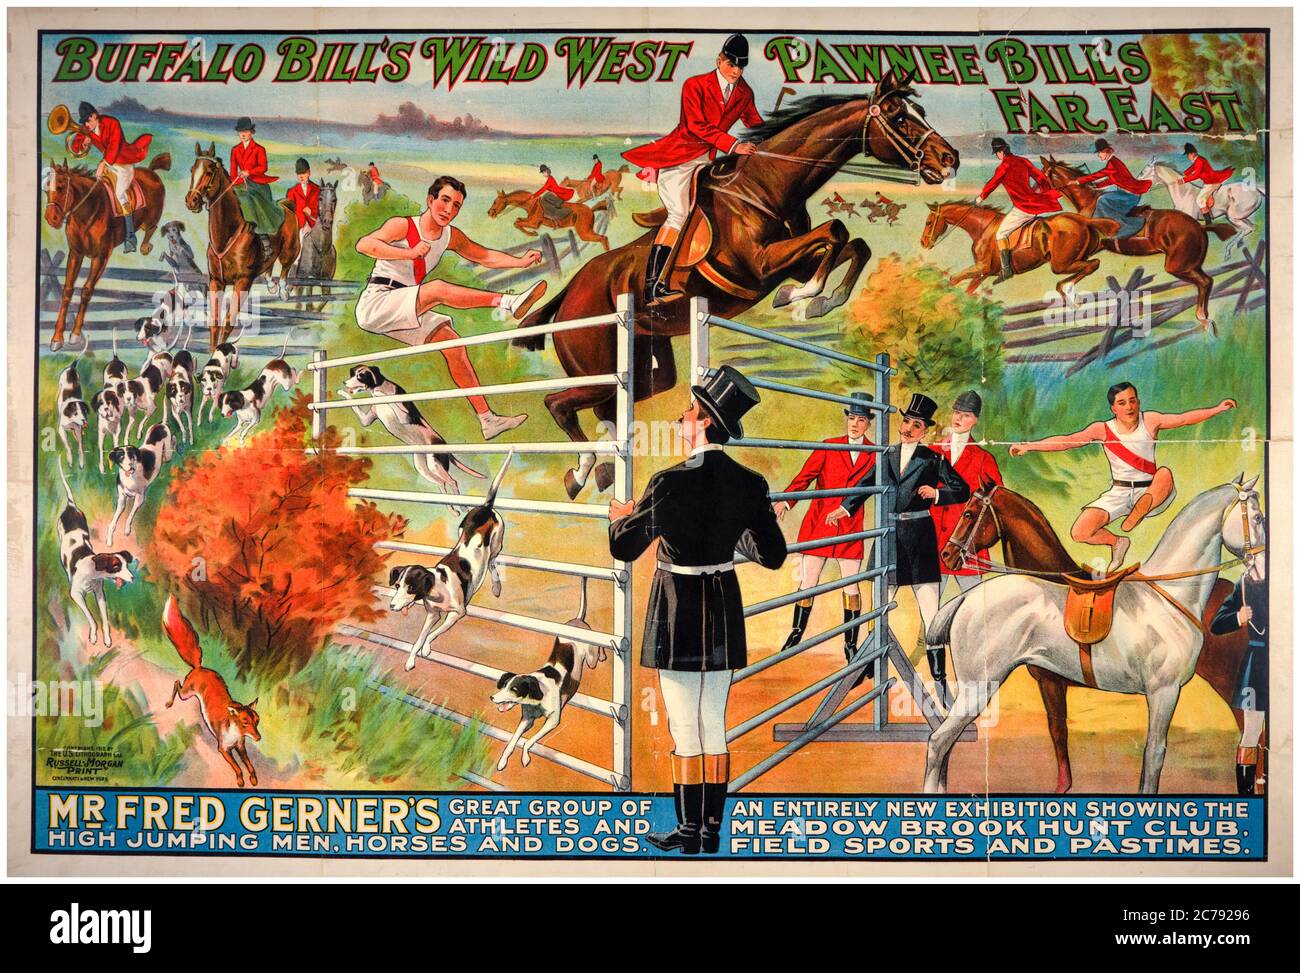 Buffalo Bill's Wild West e Pawnee Bill's Great far East show, poster, 1912 Foto Stock